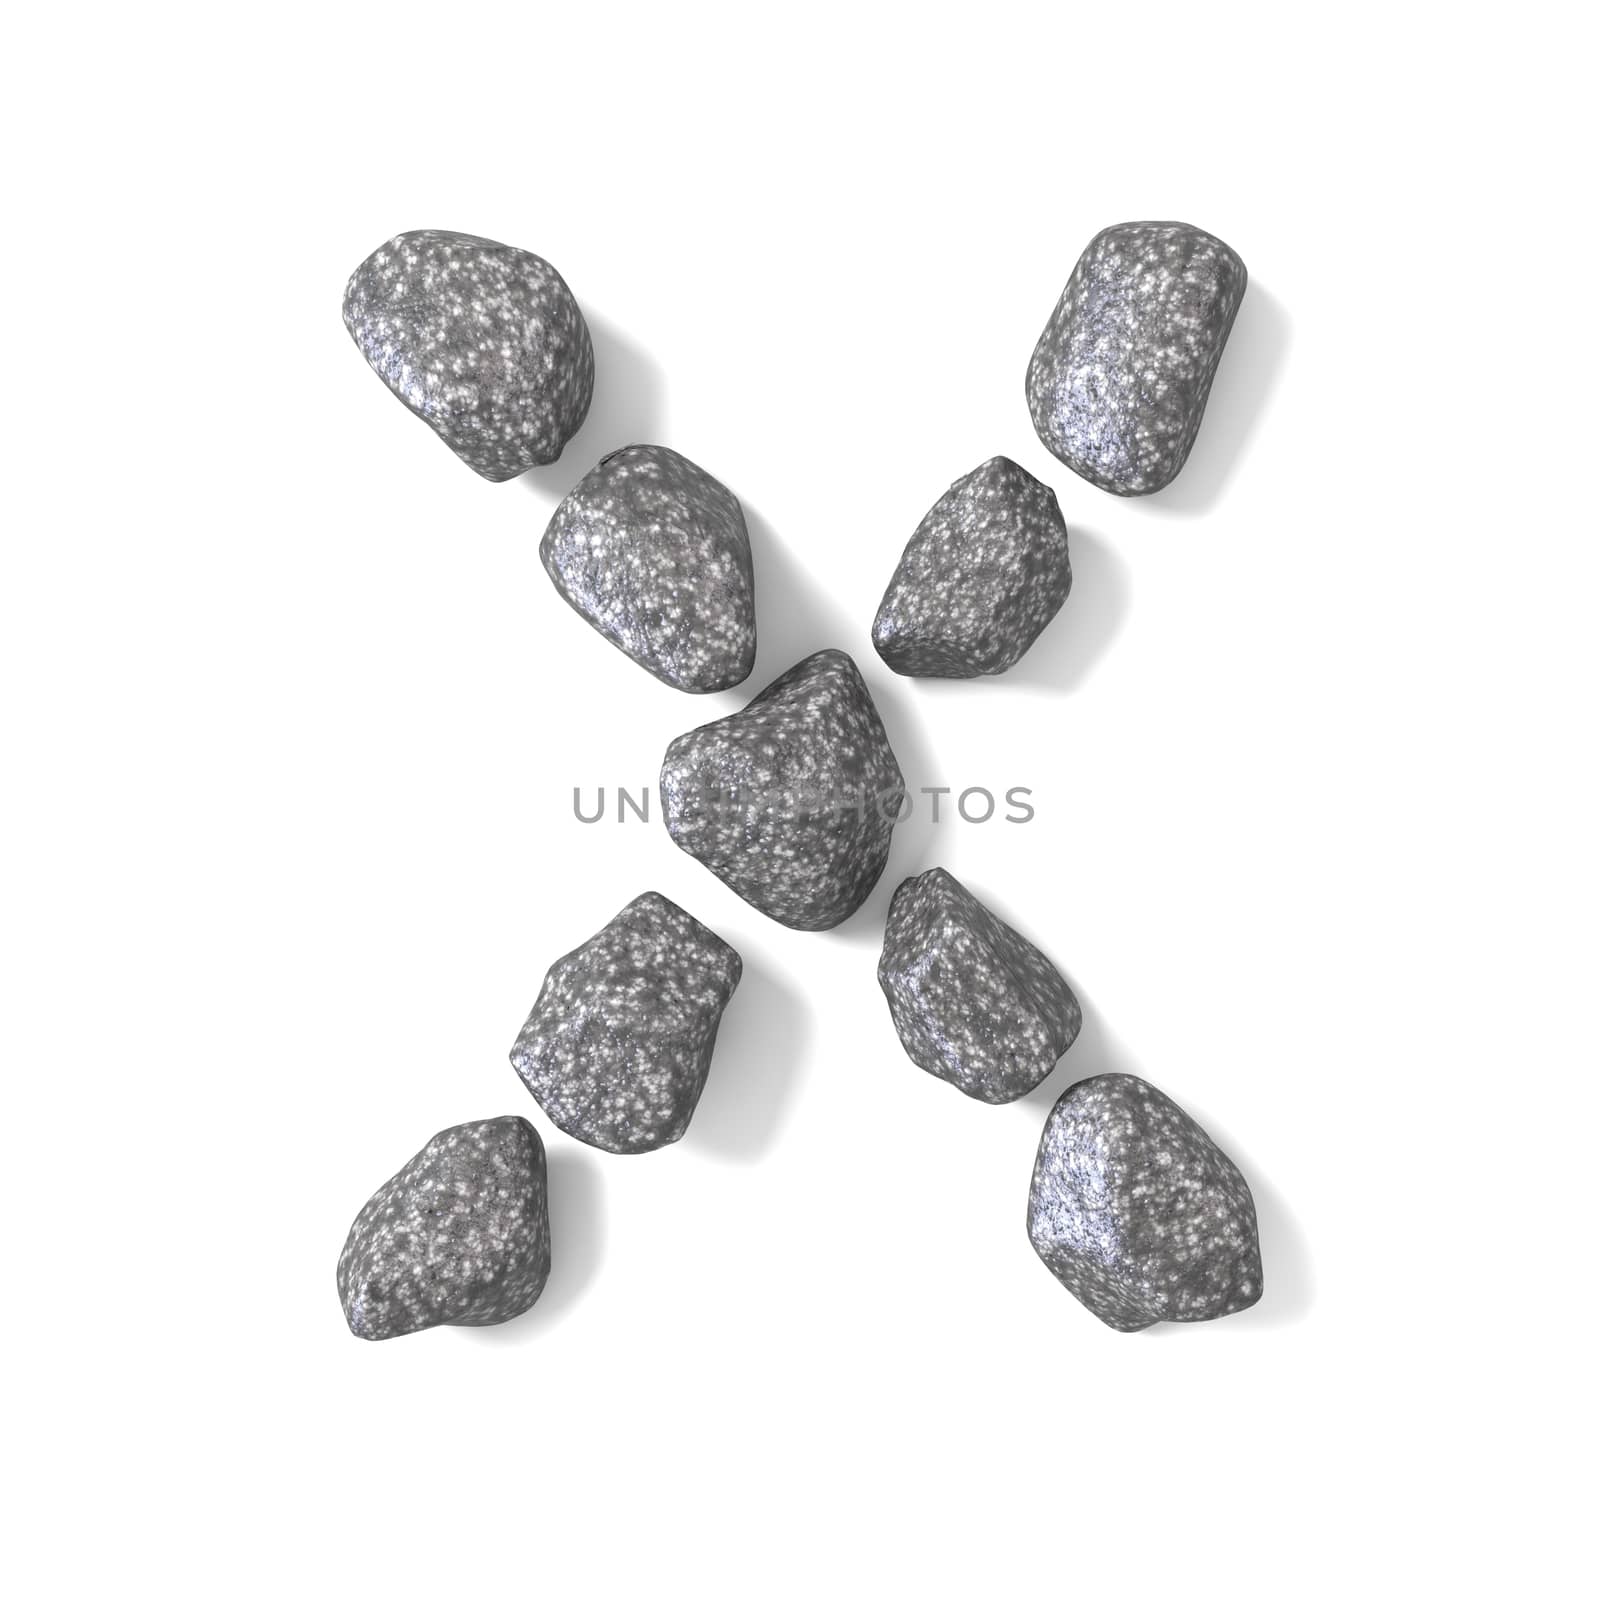 Font made of rocks LETTER X 3D render illustration isolated on white background